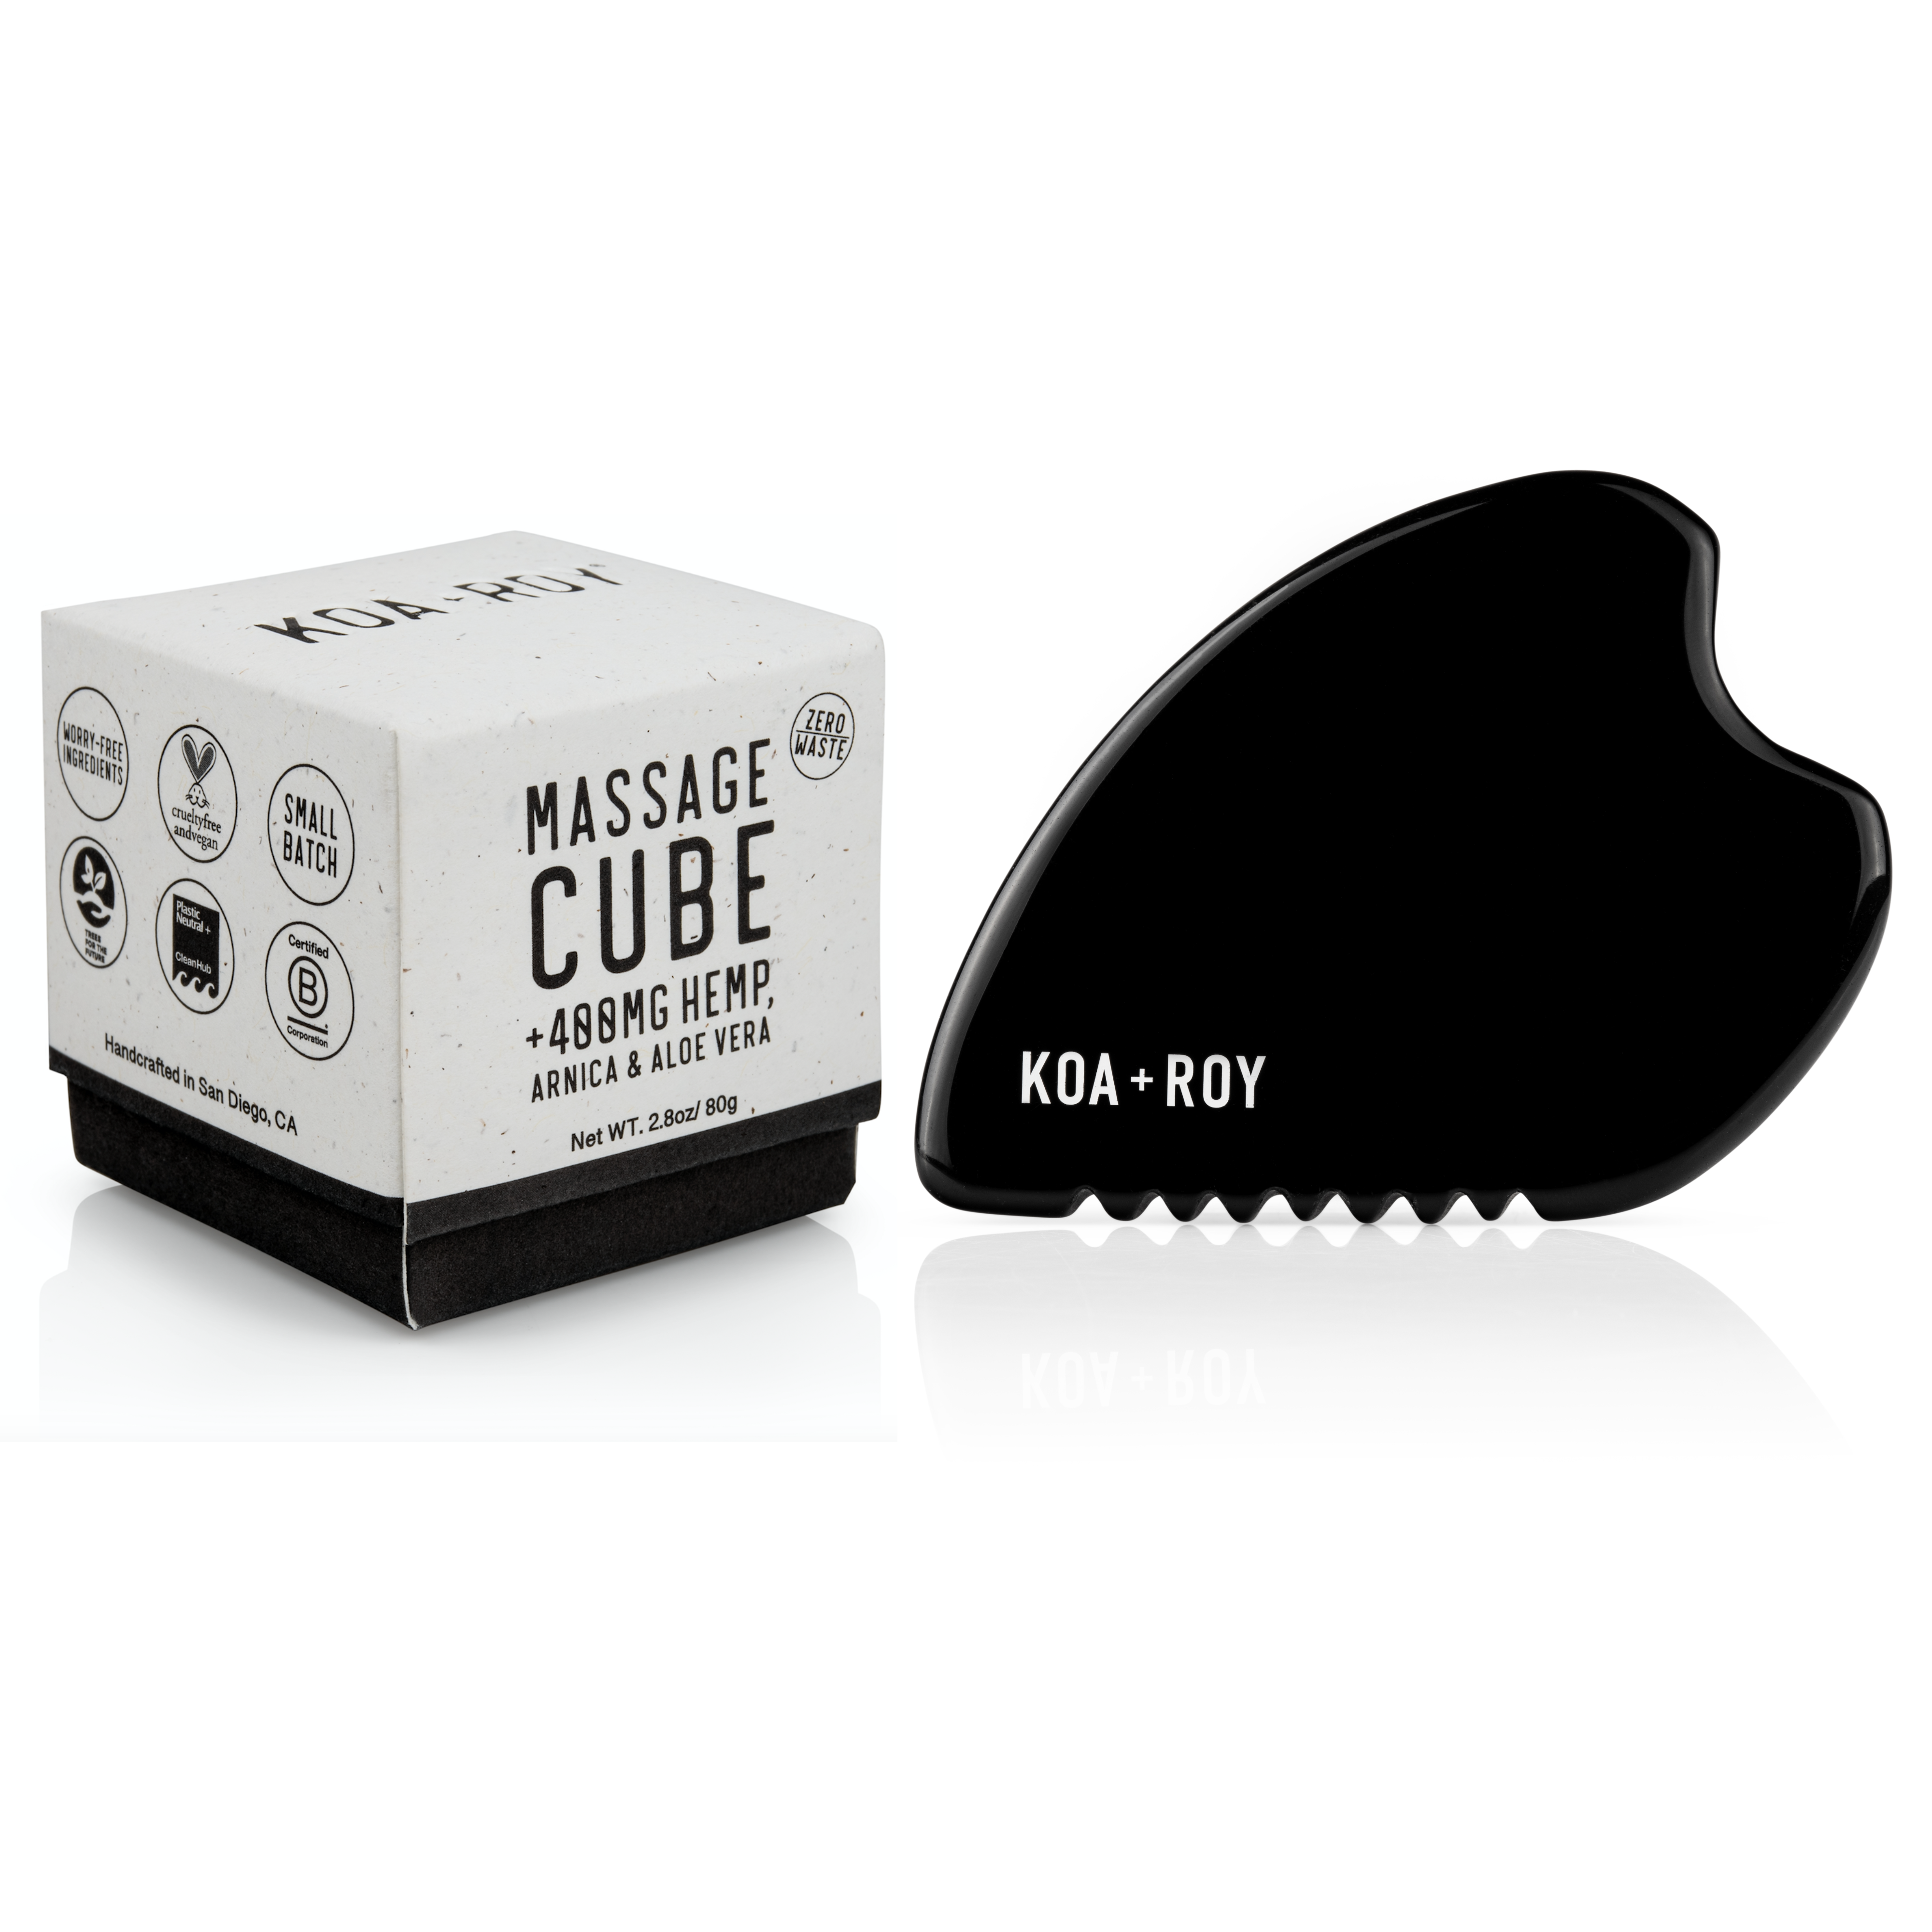 Massage Cube + CBD and Black obsidian Body gua sha